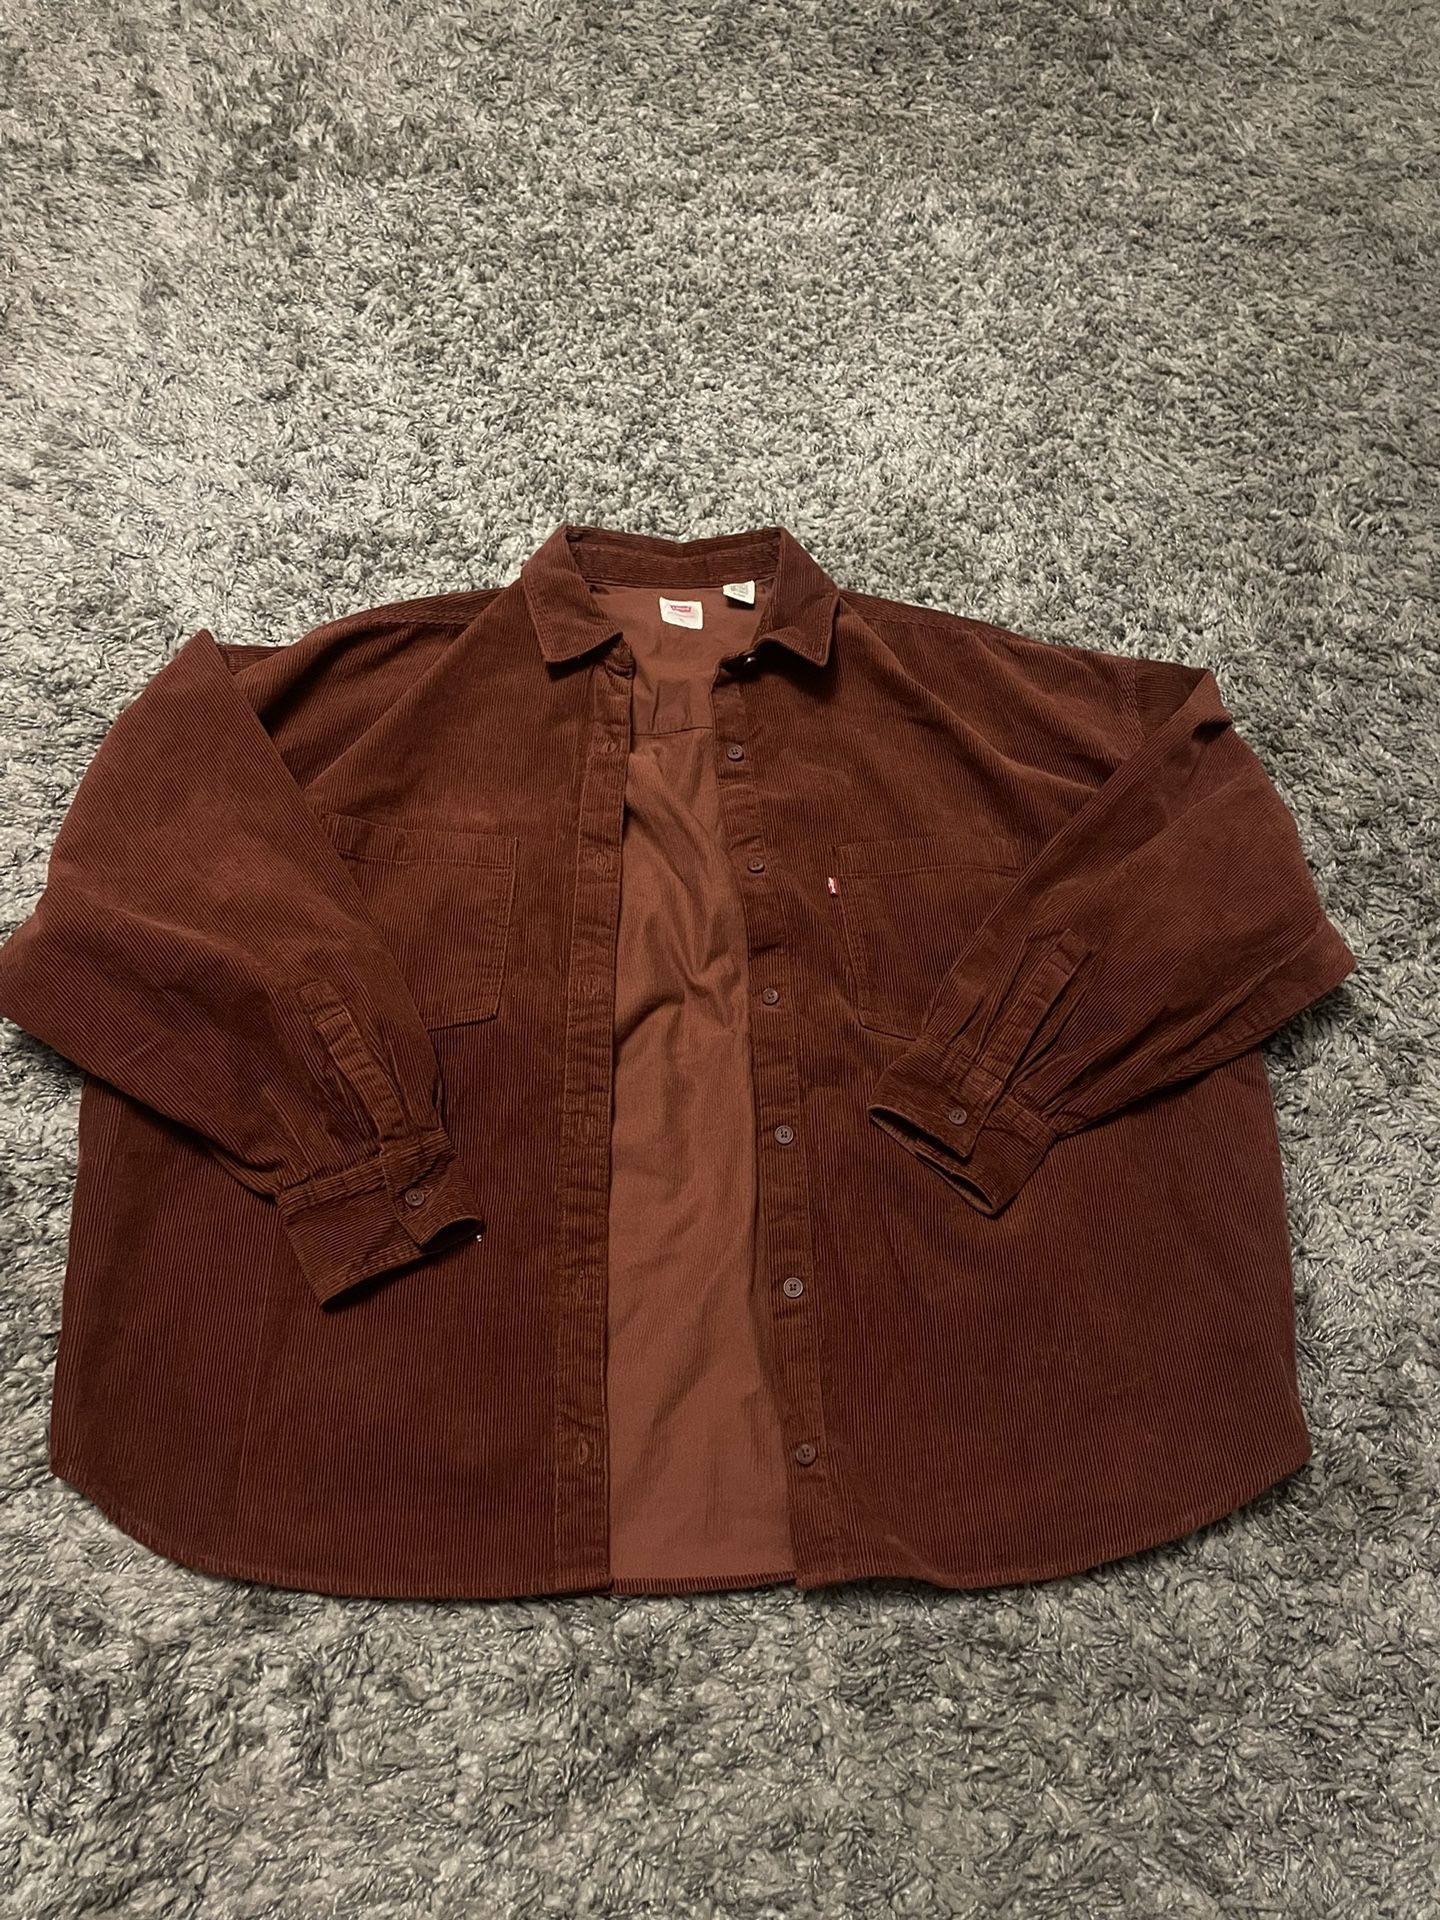 LEVI’S Women’s Elliot Utility Cherry Mahagony Brown Corduroy Brown Overshirt XL